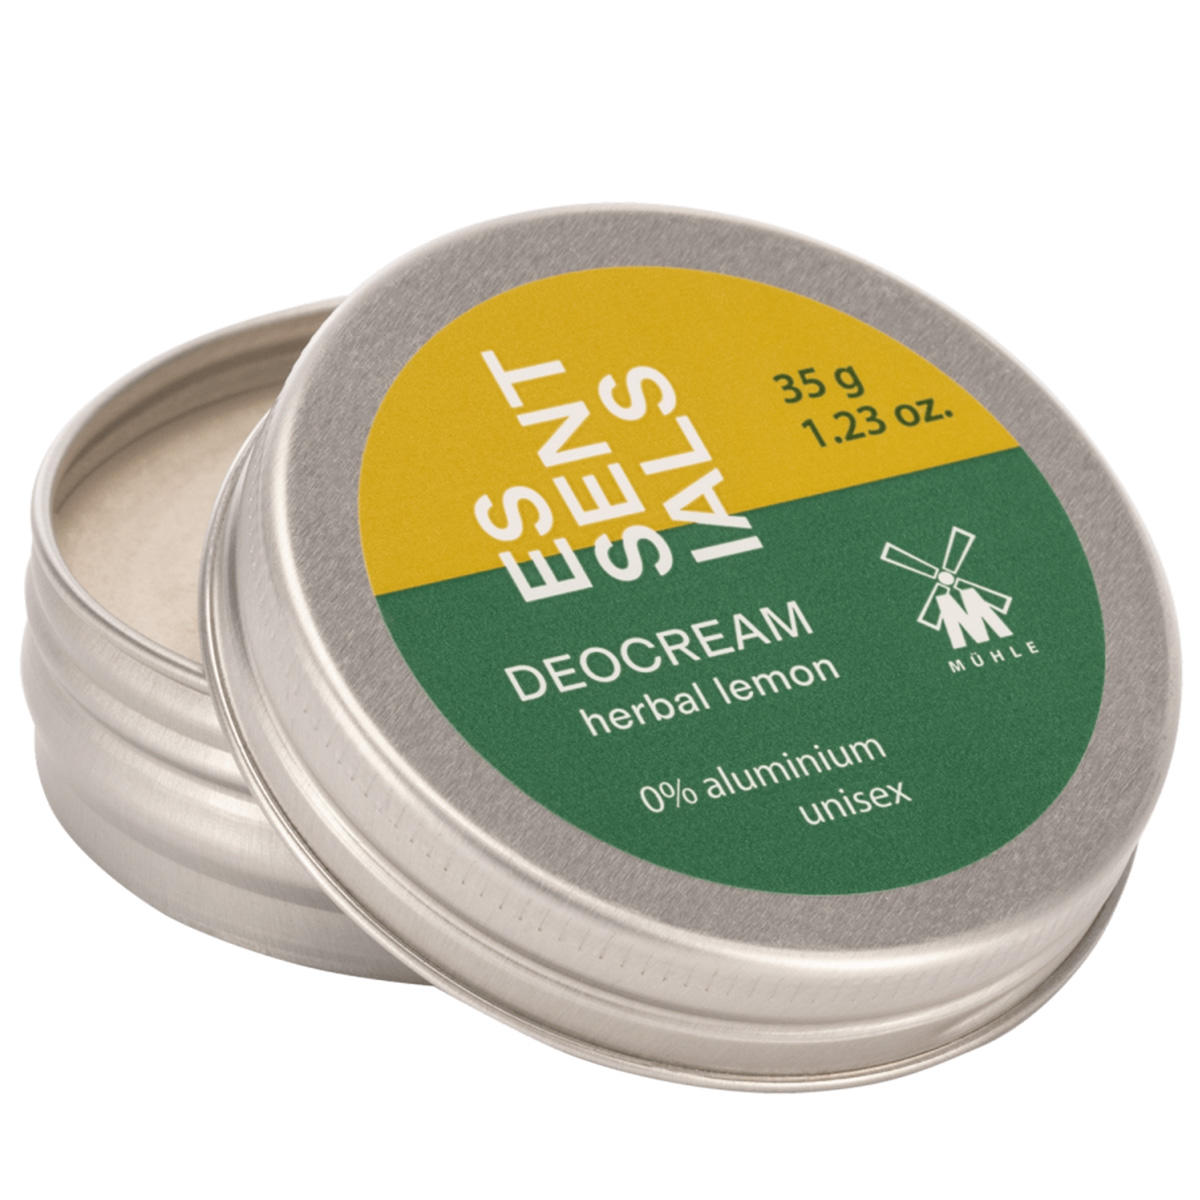 MÜHLE ESSENTIALS Deodorantcrème Herbal Lemon 35 g - 3